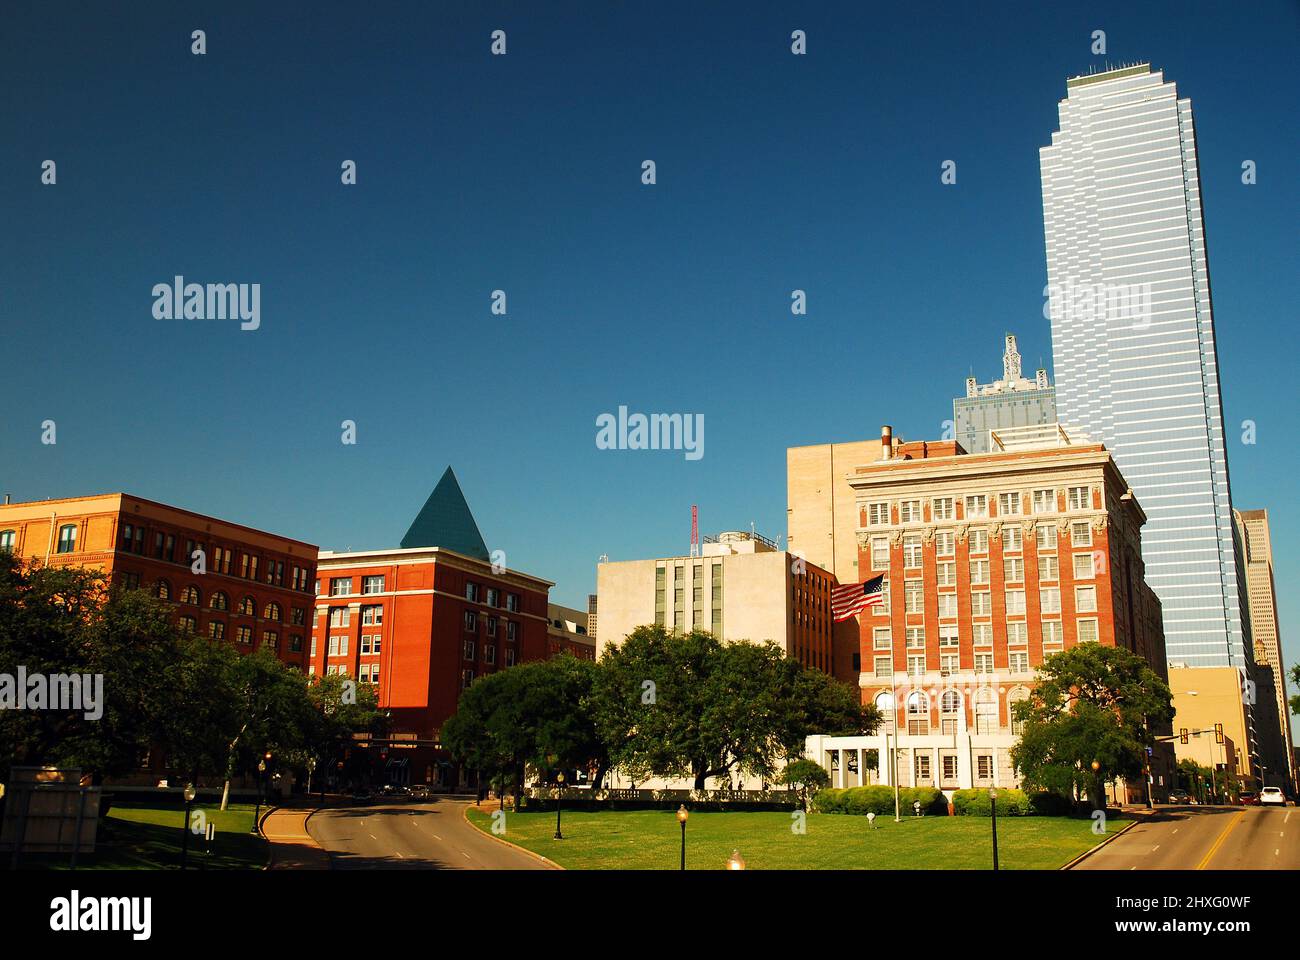 Dealey Plaza, Dallas Texas Banque D'Images